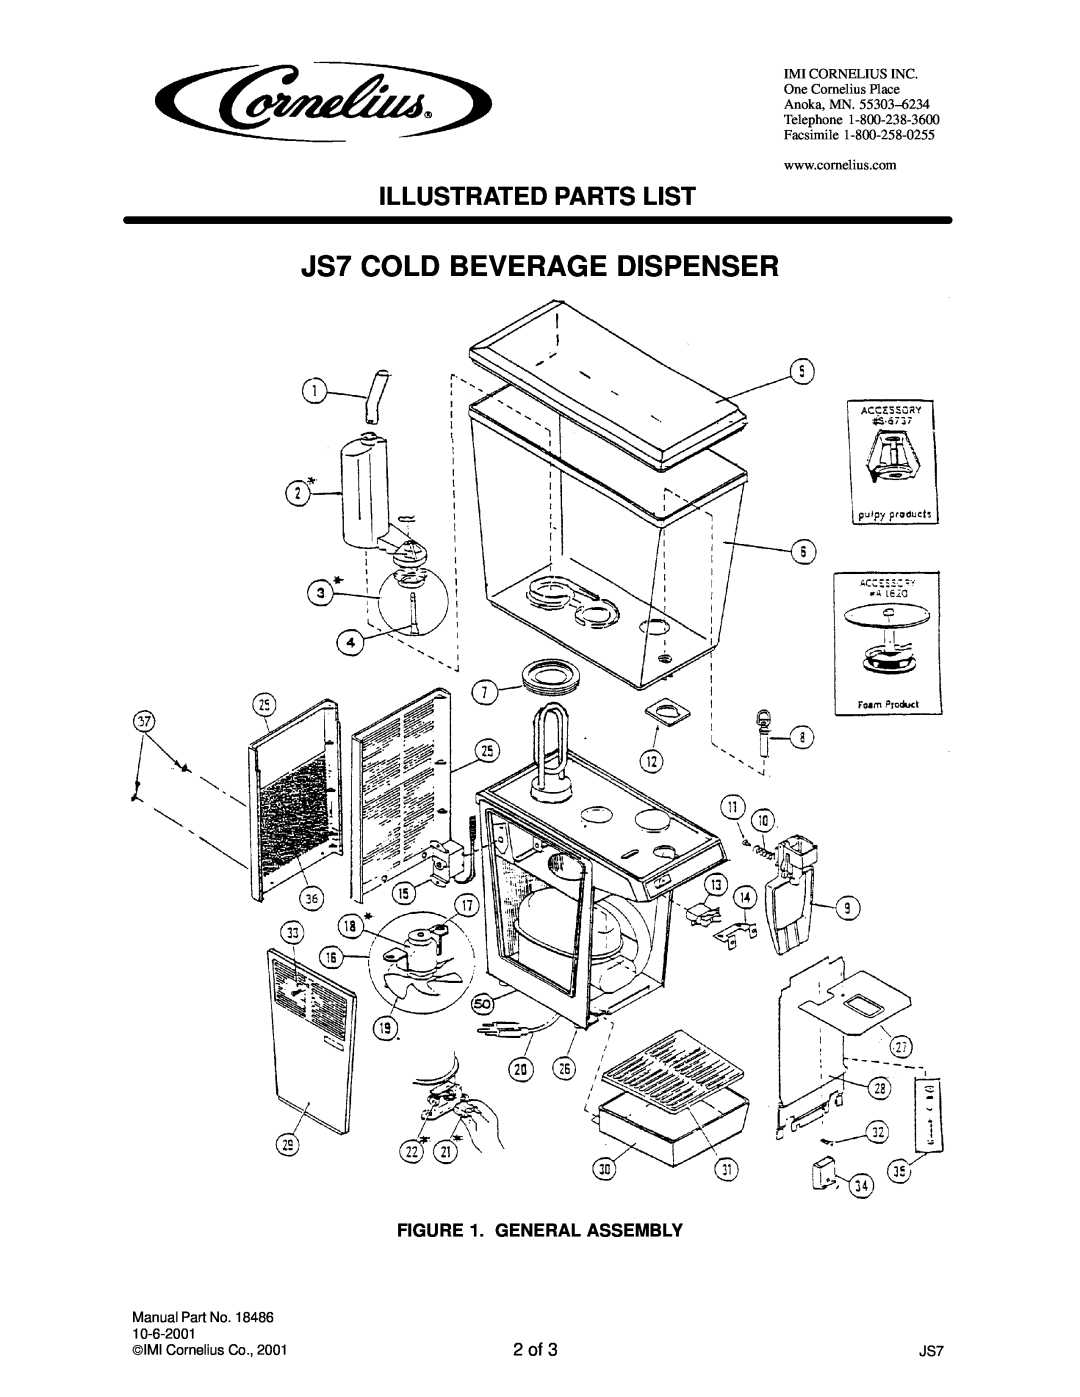 Panasonic manual JS7 COLD BEVERAGE DISPENSER, General Assembly, 2 of, Illustrated Parts List 